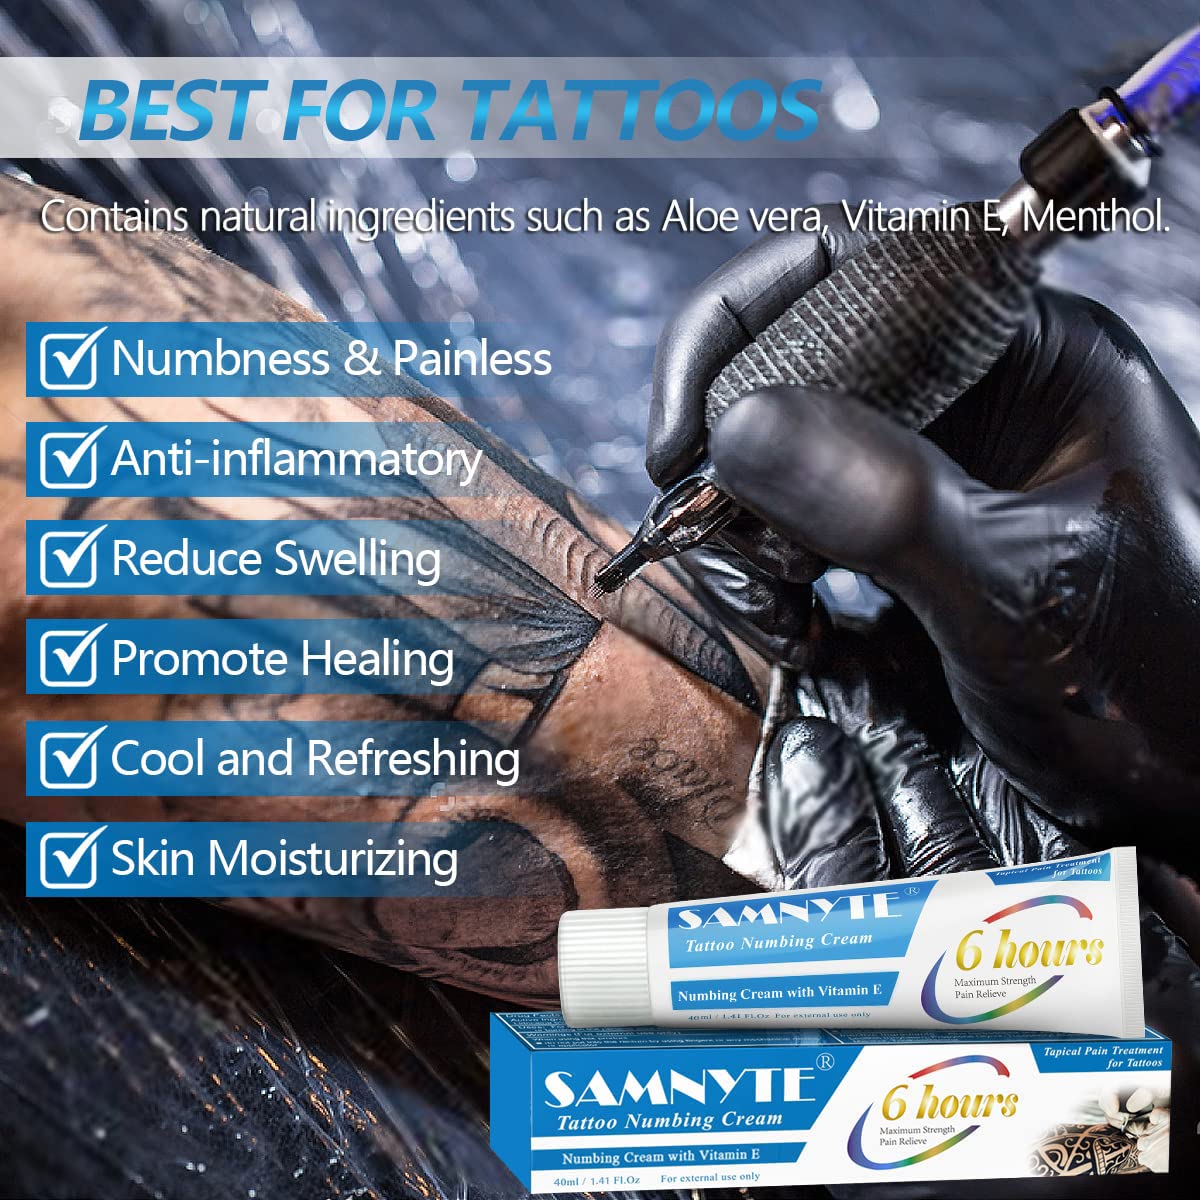 Samnyte Painless Tattoo Cream, Lasts 6-8 Hours Lidocaine Cream Maximum Strength, Best Tattoo Cream, Multi-purpose Topical Cream for Piercing, Waxing, Microneedling - 1.41Oz